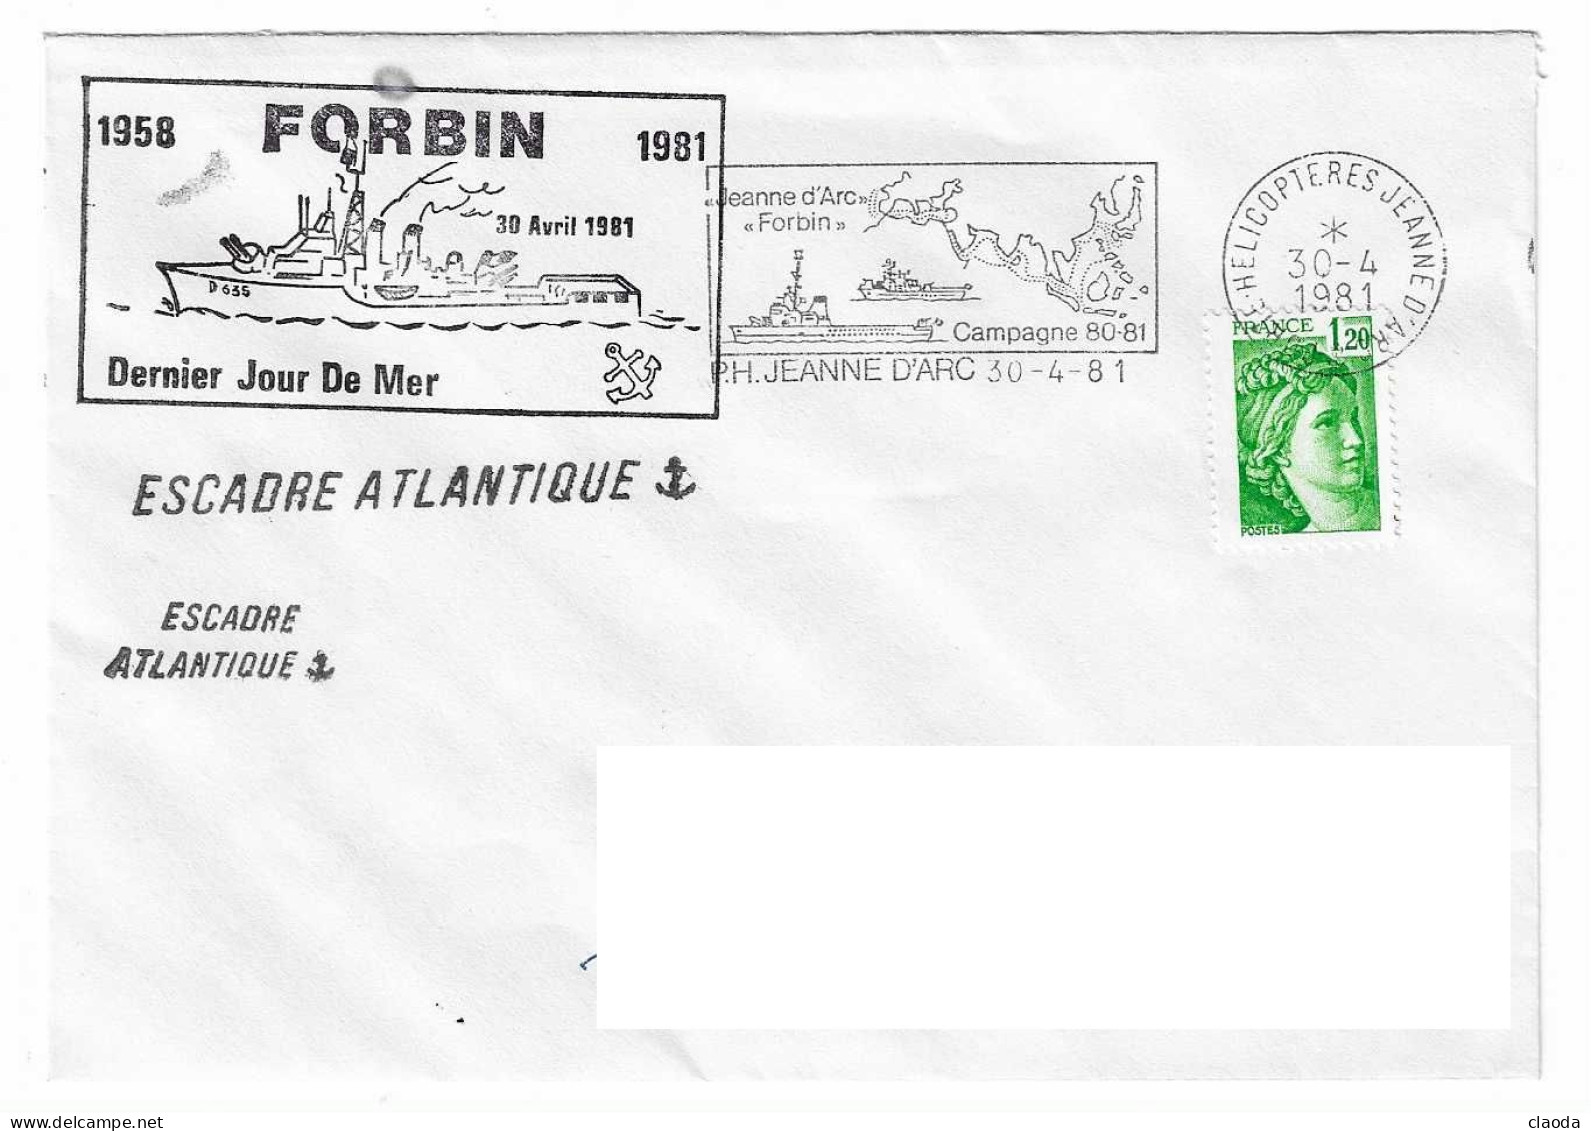 173 JDA -PORTE-HÉLICOPTÈRES JEANNE D'ARC - FORBIN - CAMPAGNE1980-1981 DERNIER JOUR DE MER DU FORBIN - Seepost